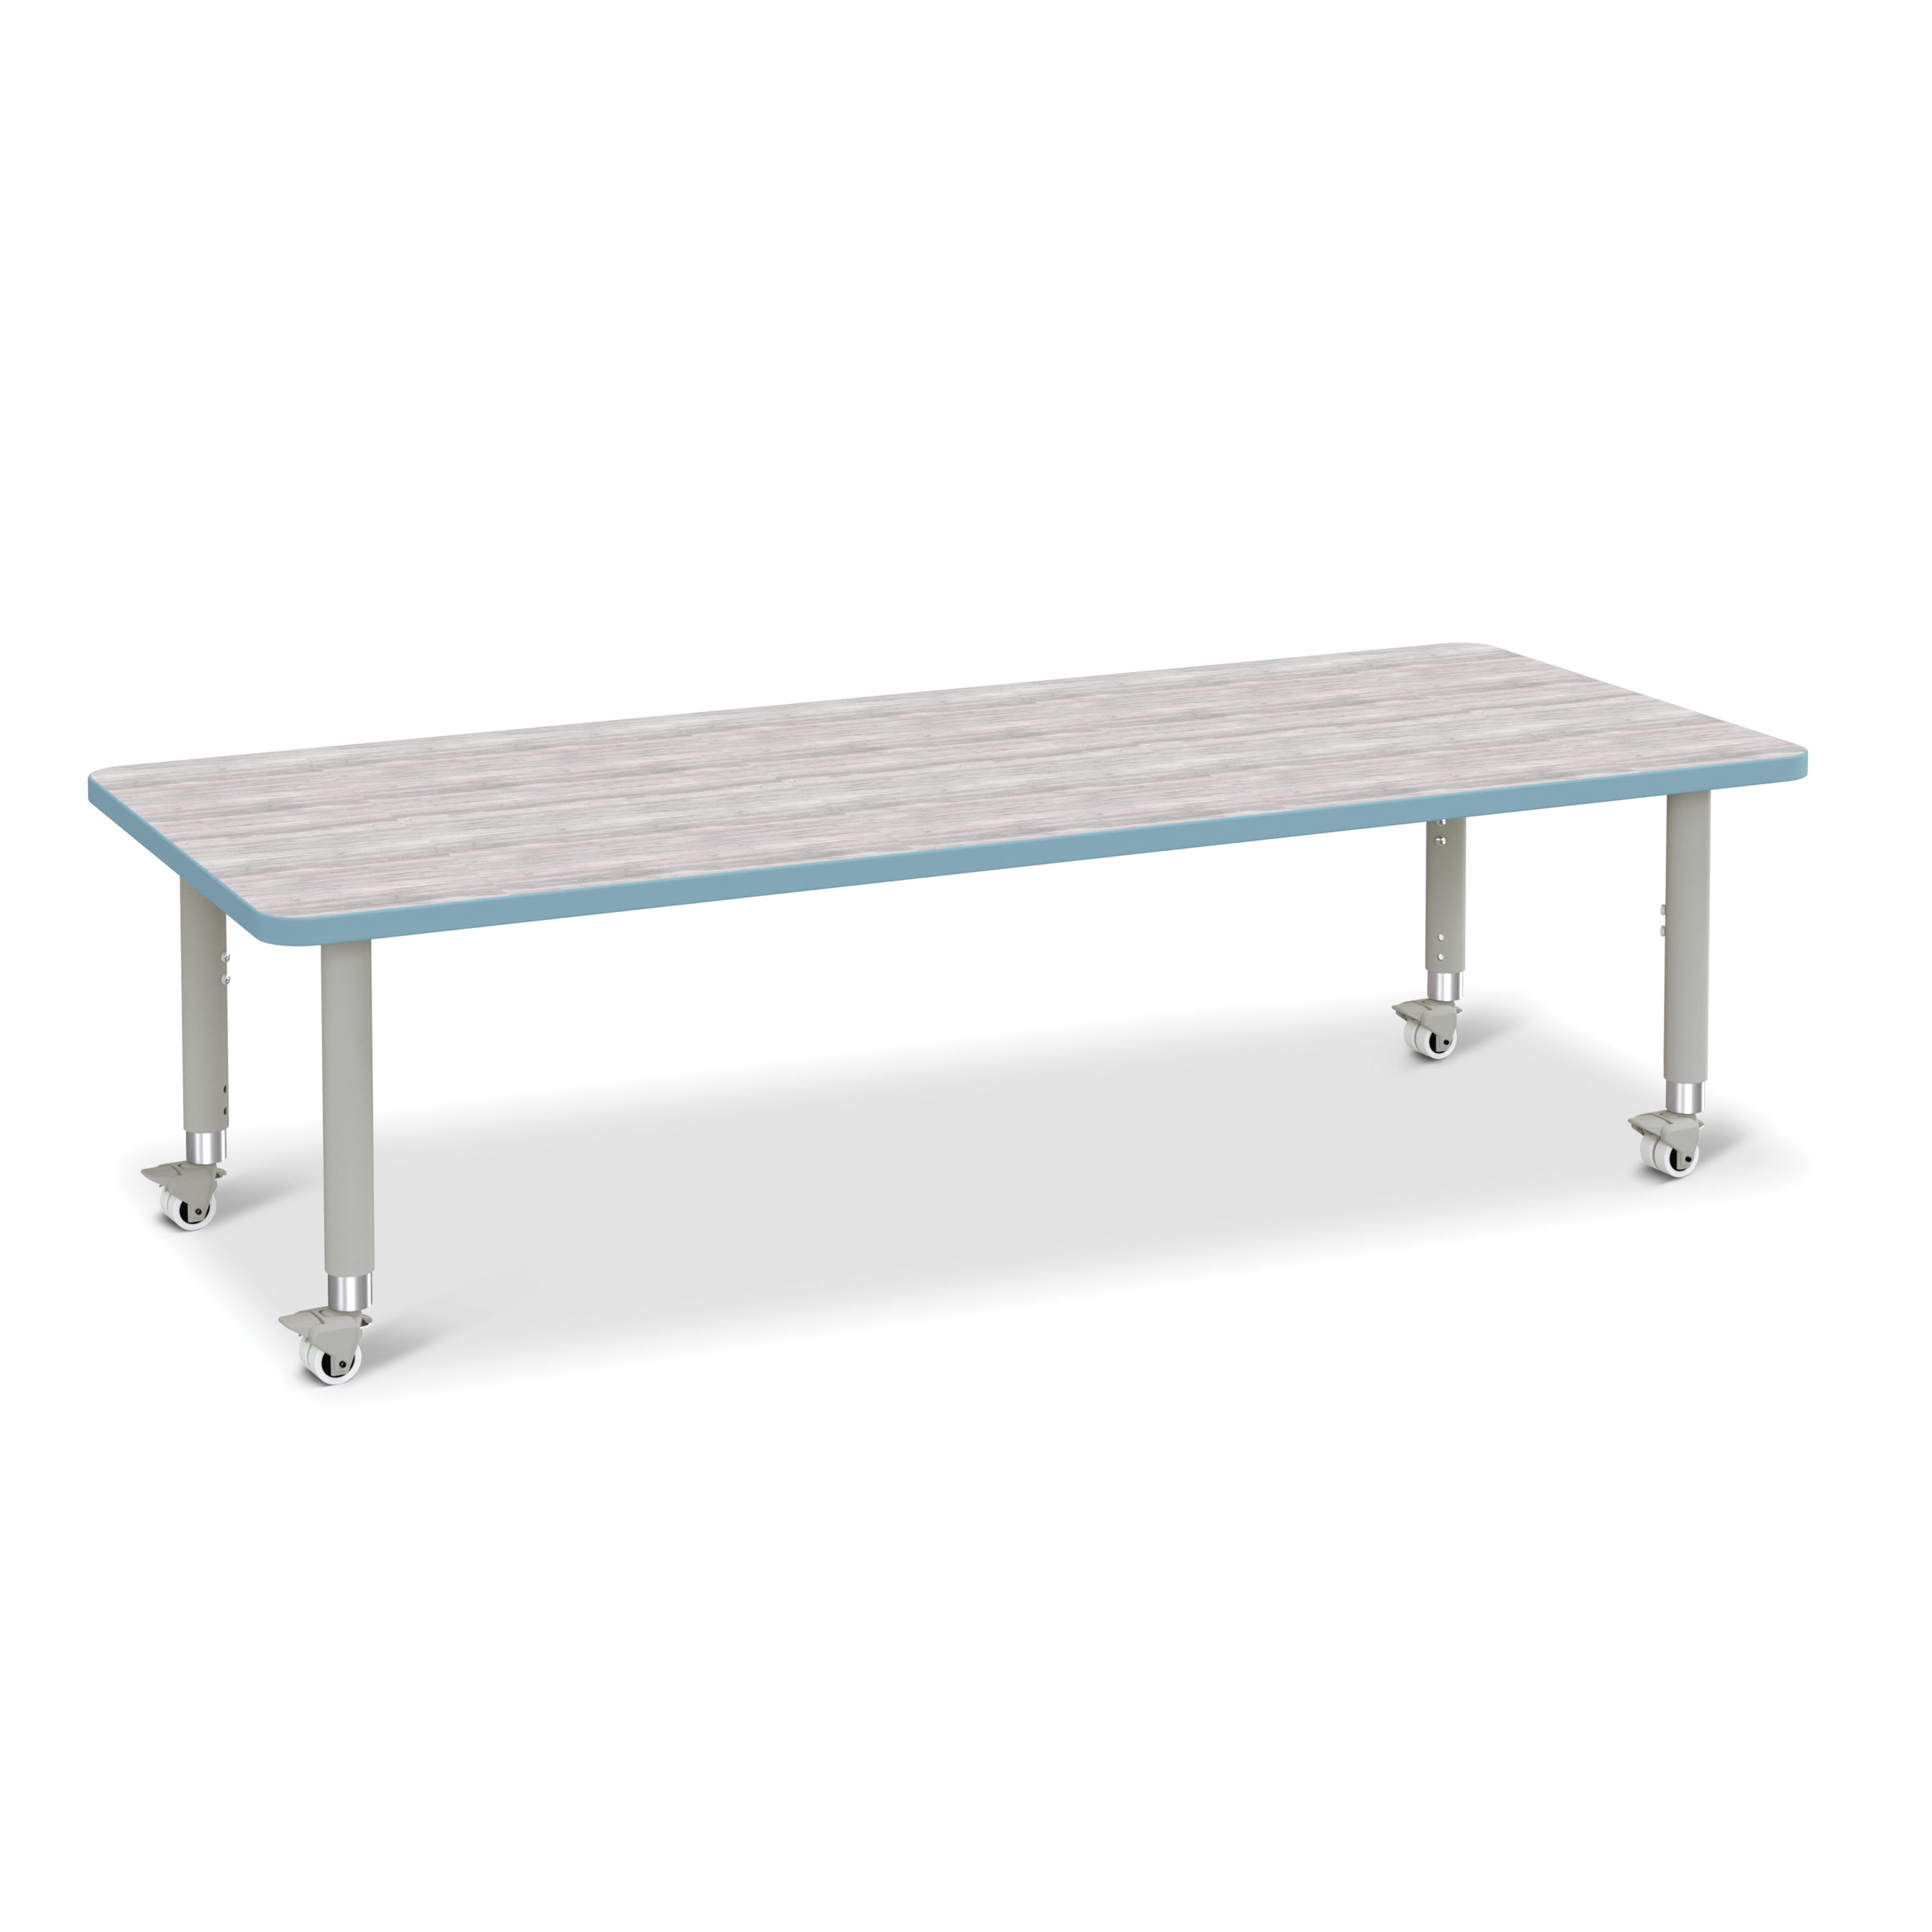 6413JCM452, Berries Rectangle Activity Table - 30" X 72", Mobile - Driftwood Gray/Coastal Blue/Gray